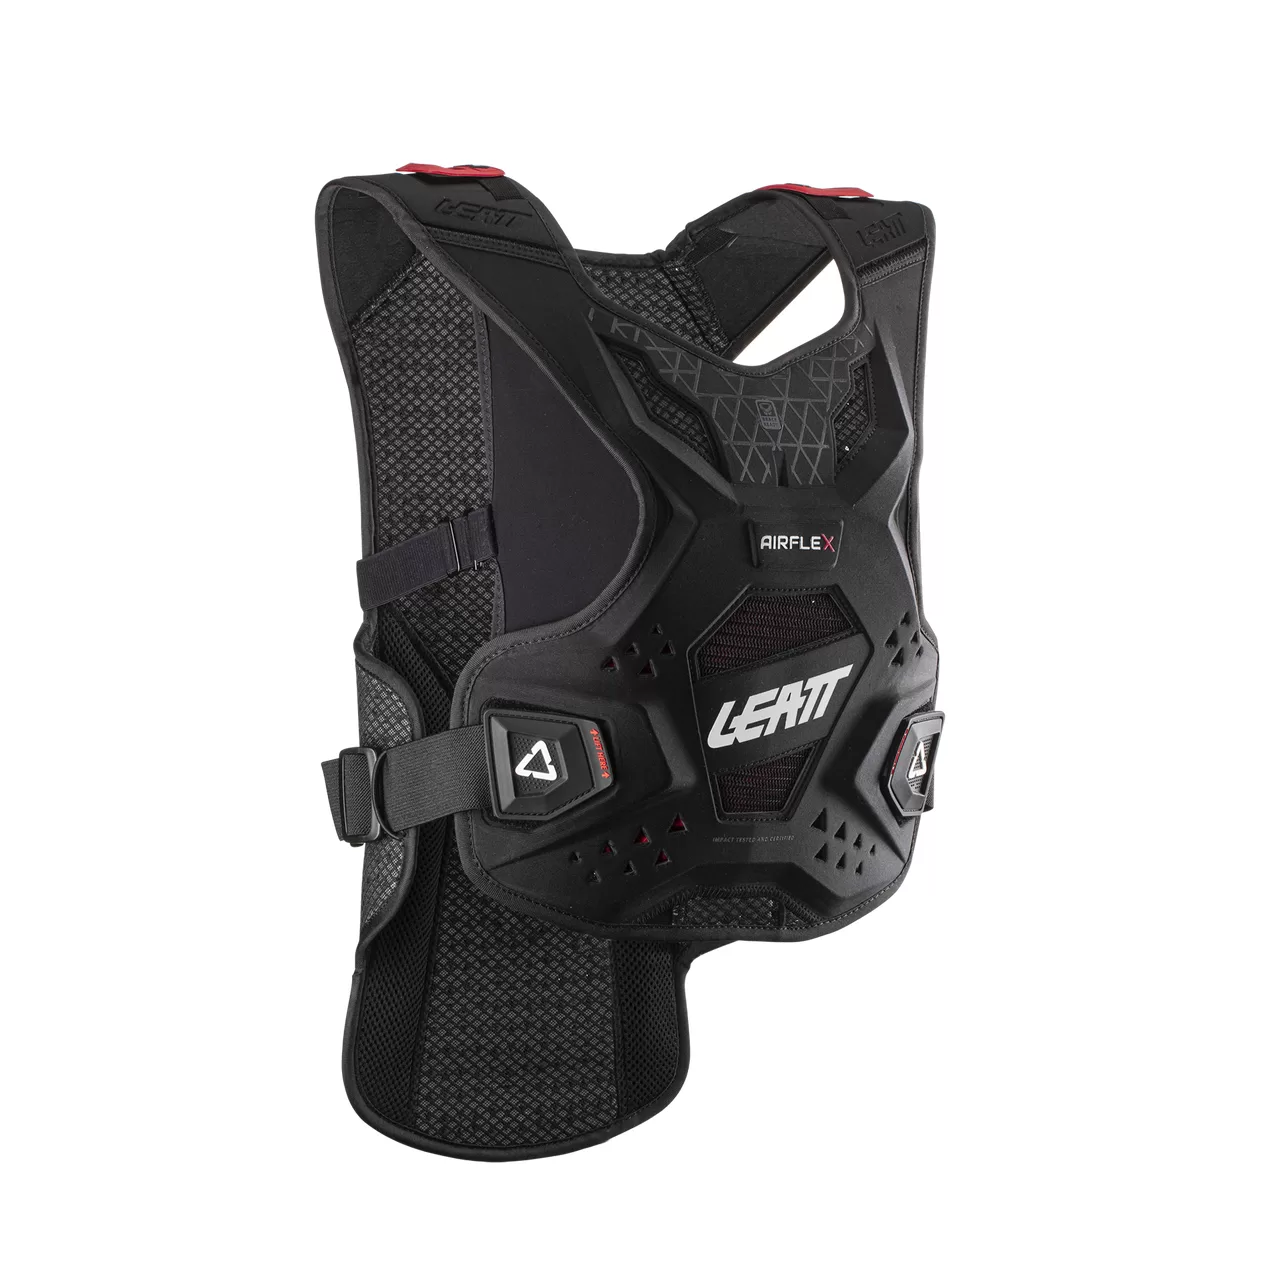 Biker Chest Guard / Body Armor Chest Protector Gear (Vjc 720)